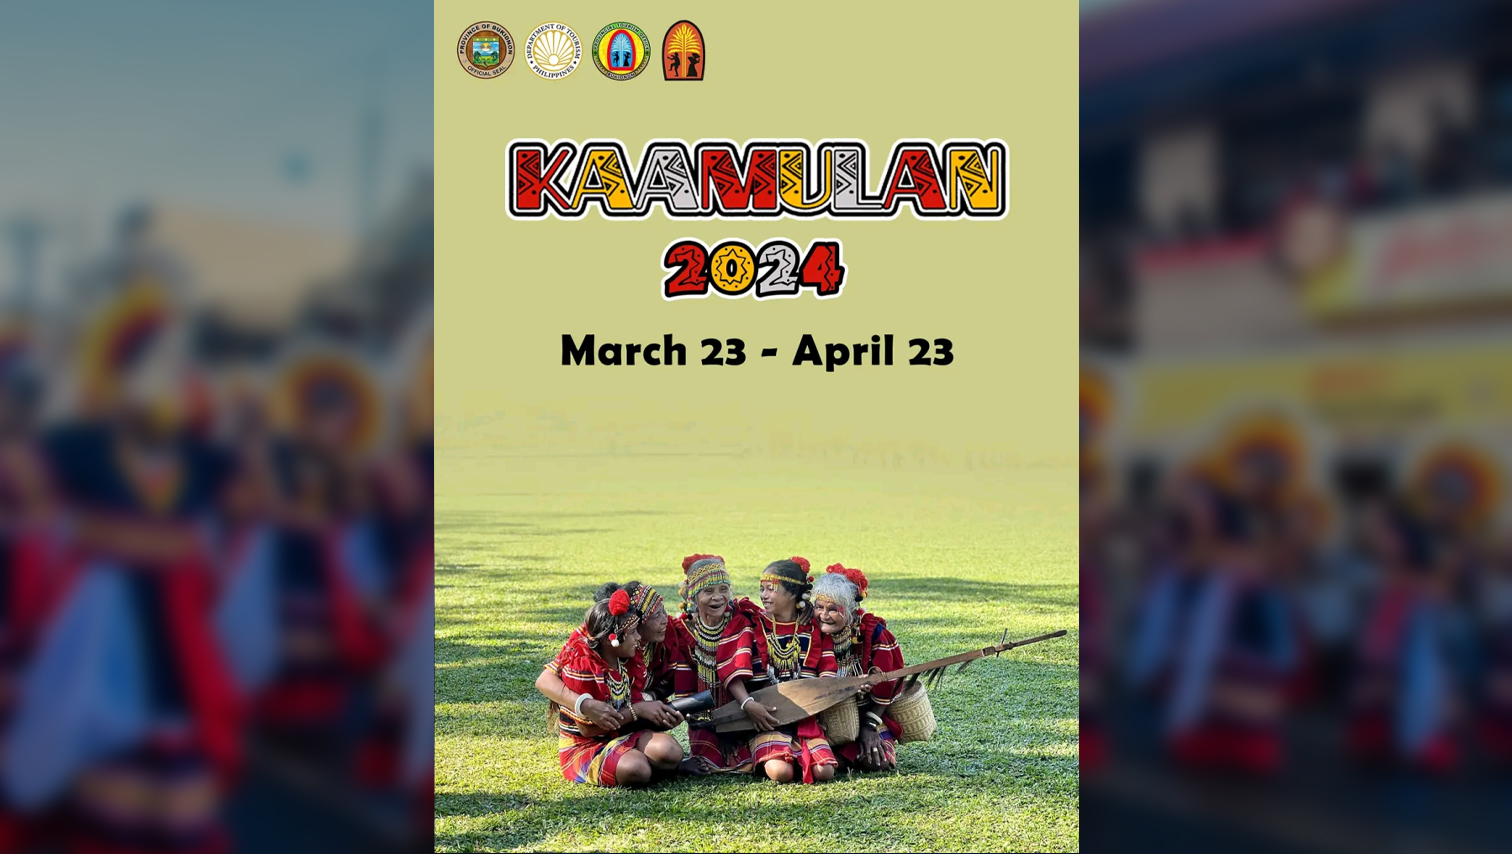 Kaamulan 2024 starts March 23